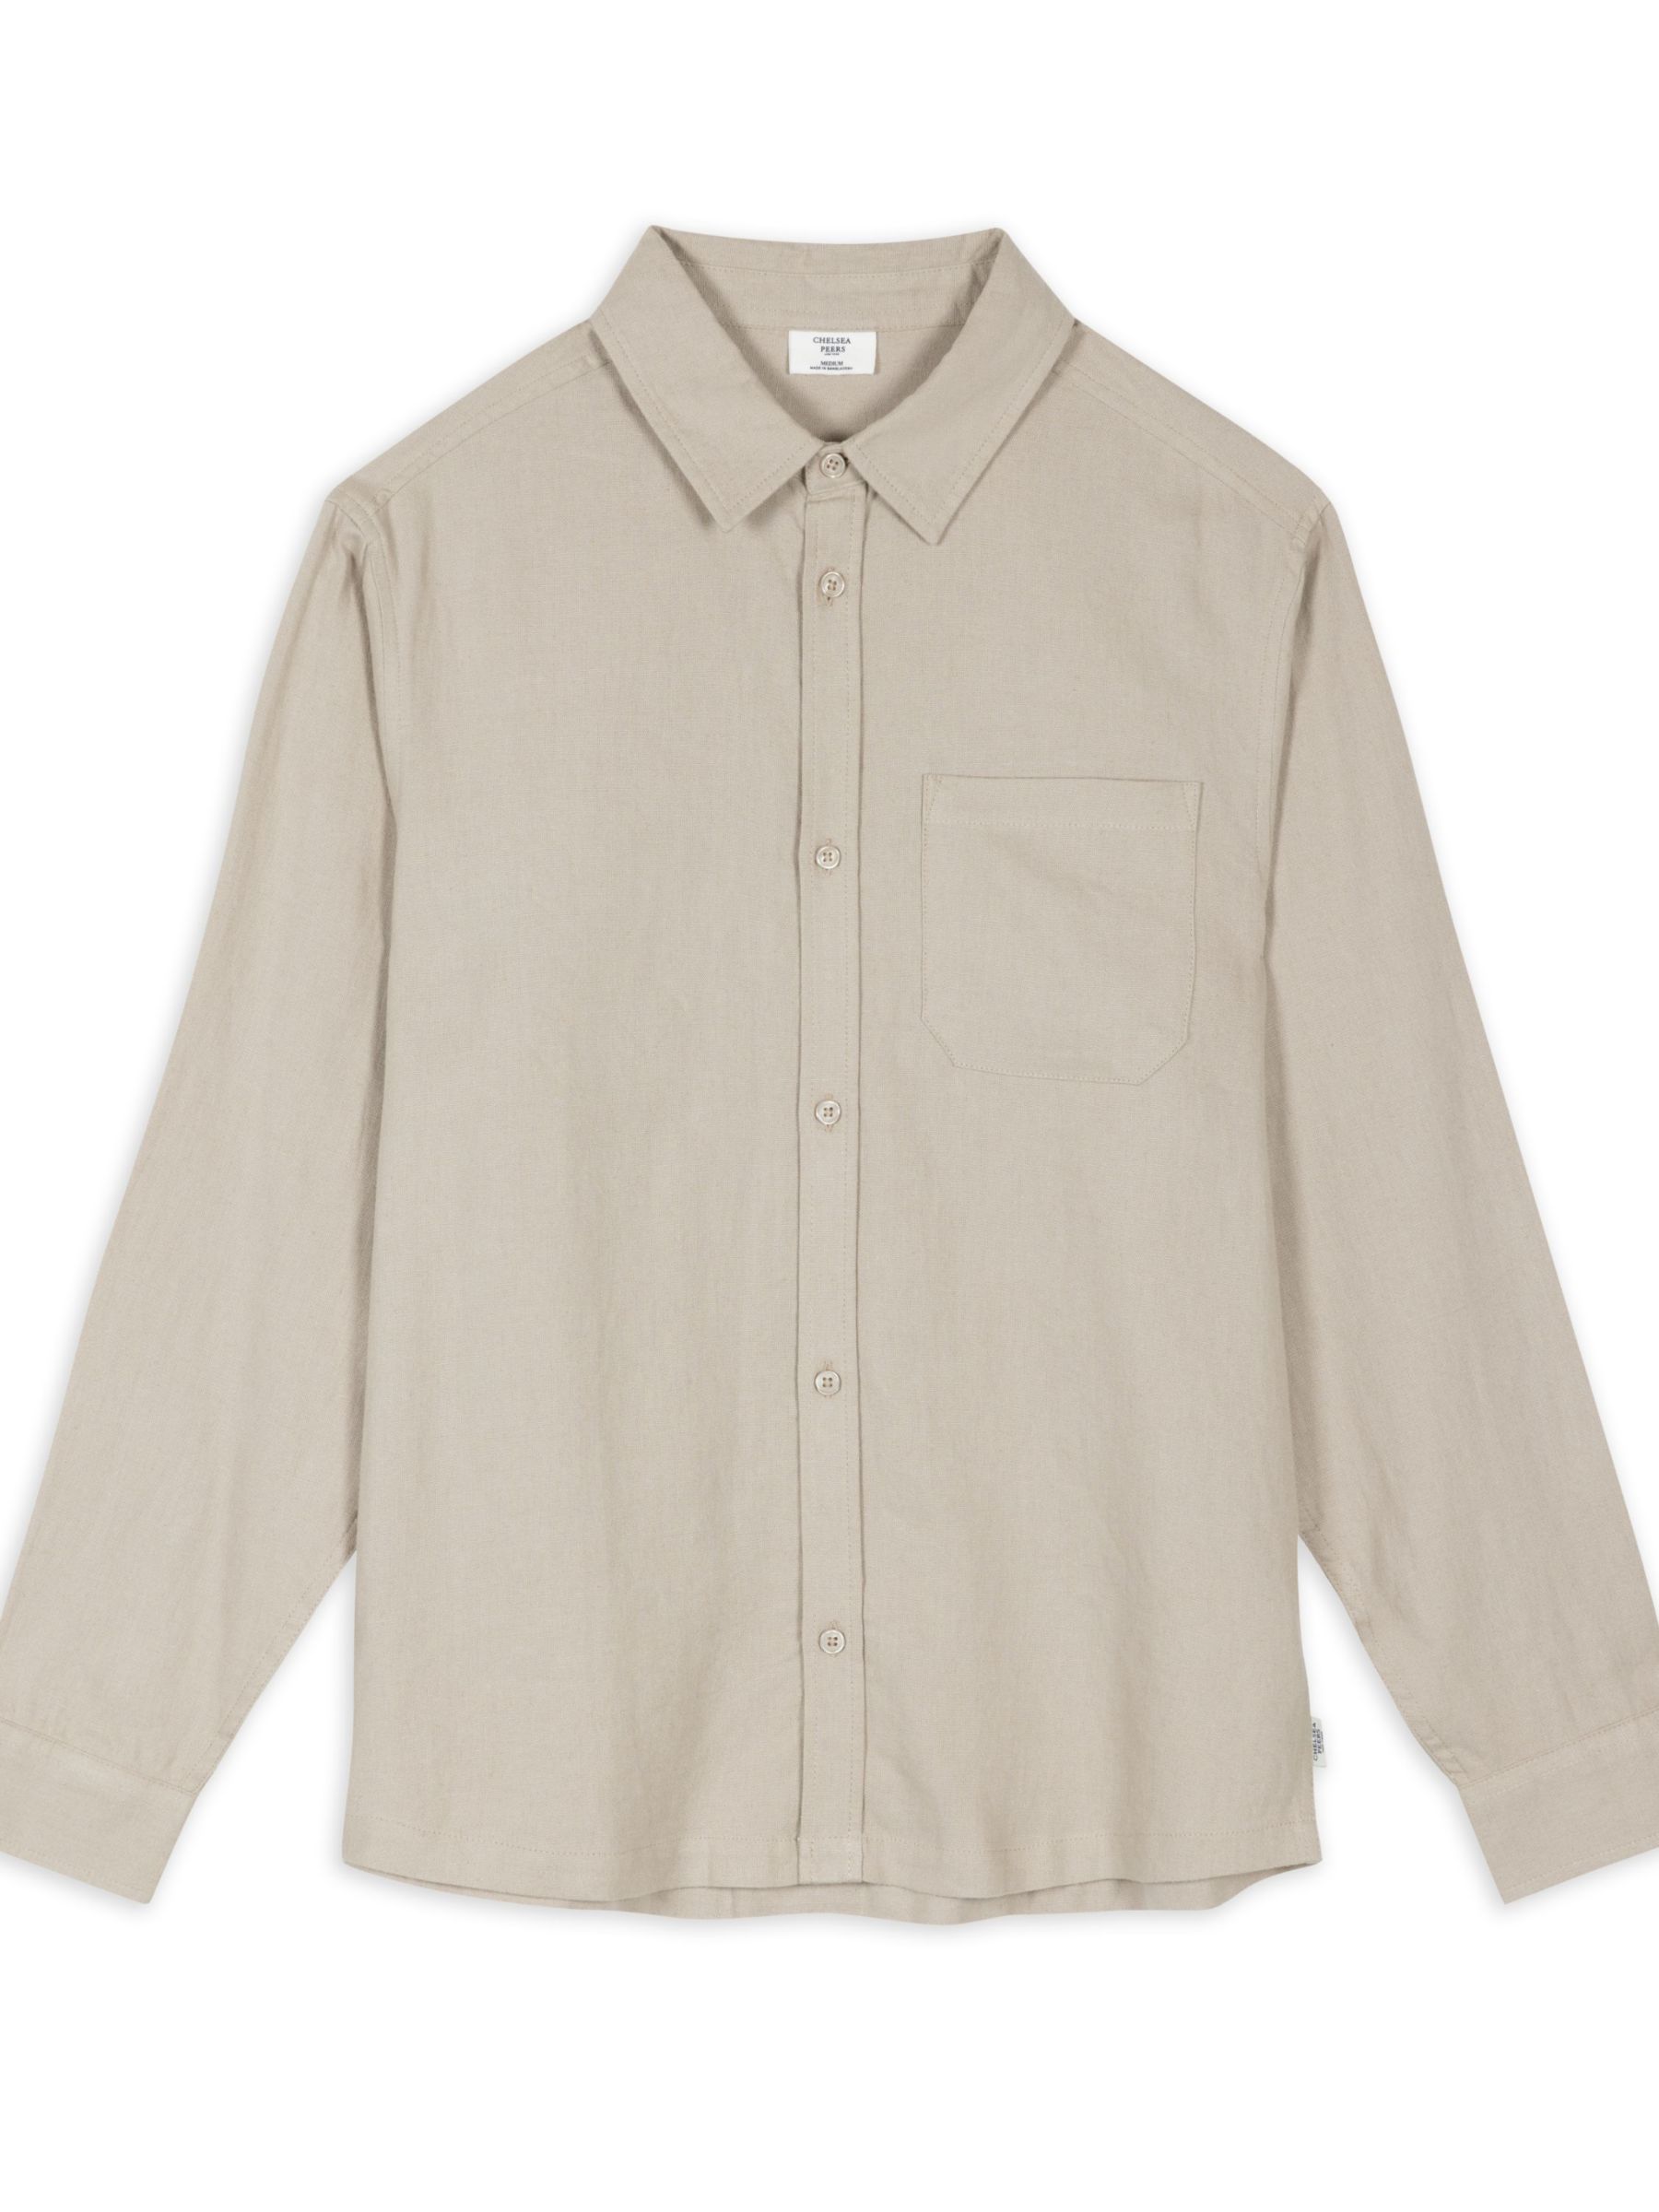 Buy Chelsea Peers Linen Blend Long Sleeve Shirt Online at johnlewis.com